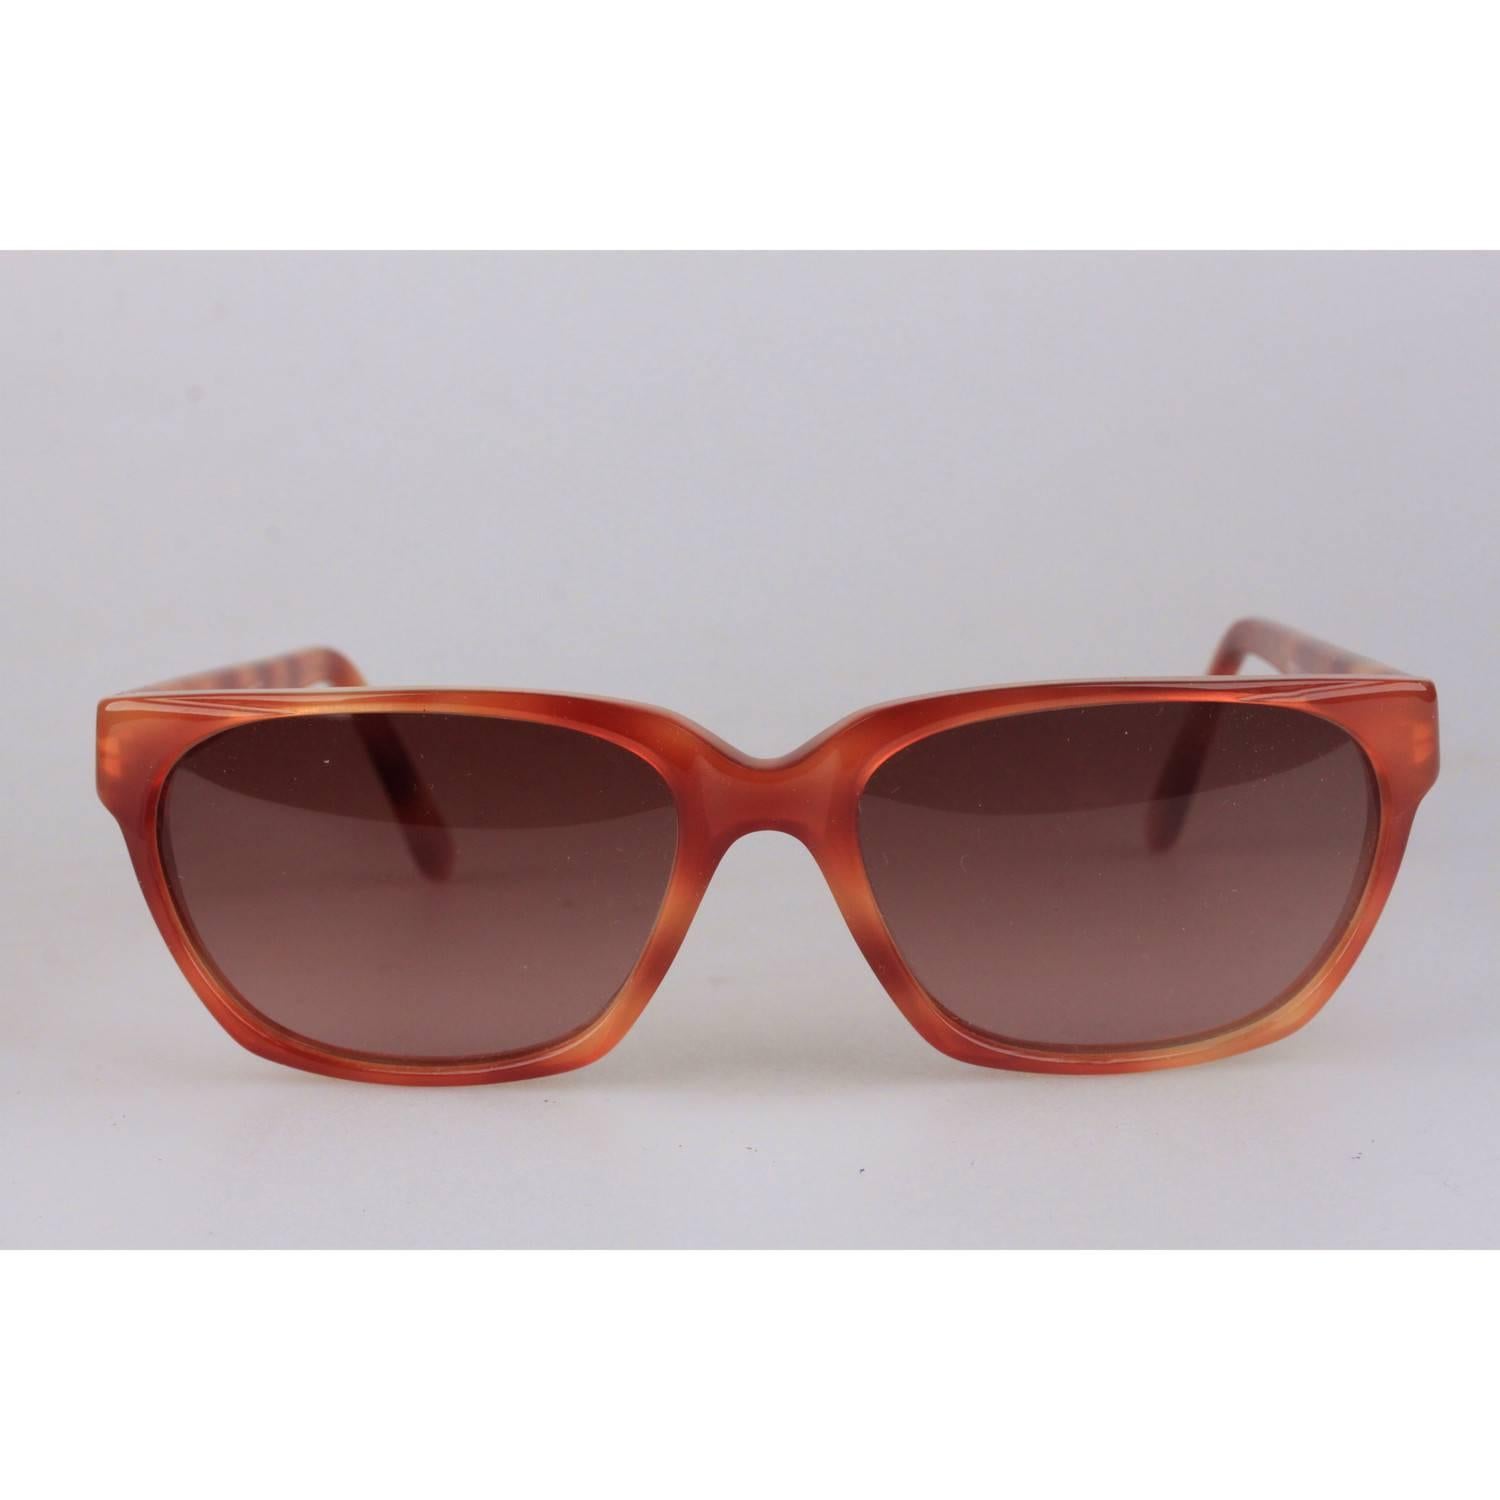 YVES SAINT LAURENT Vintage Sunglasses Phocos 56-16mm New Old Stock 4